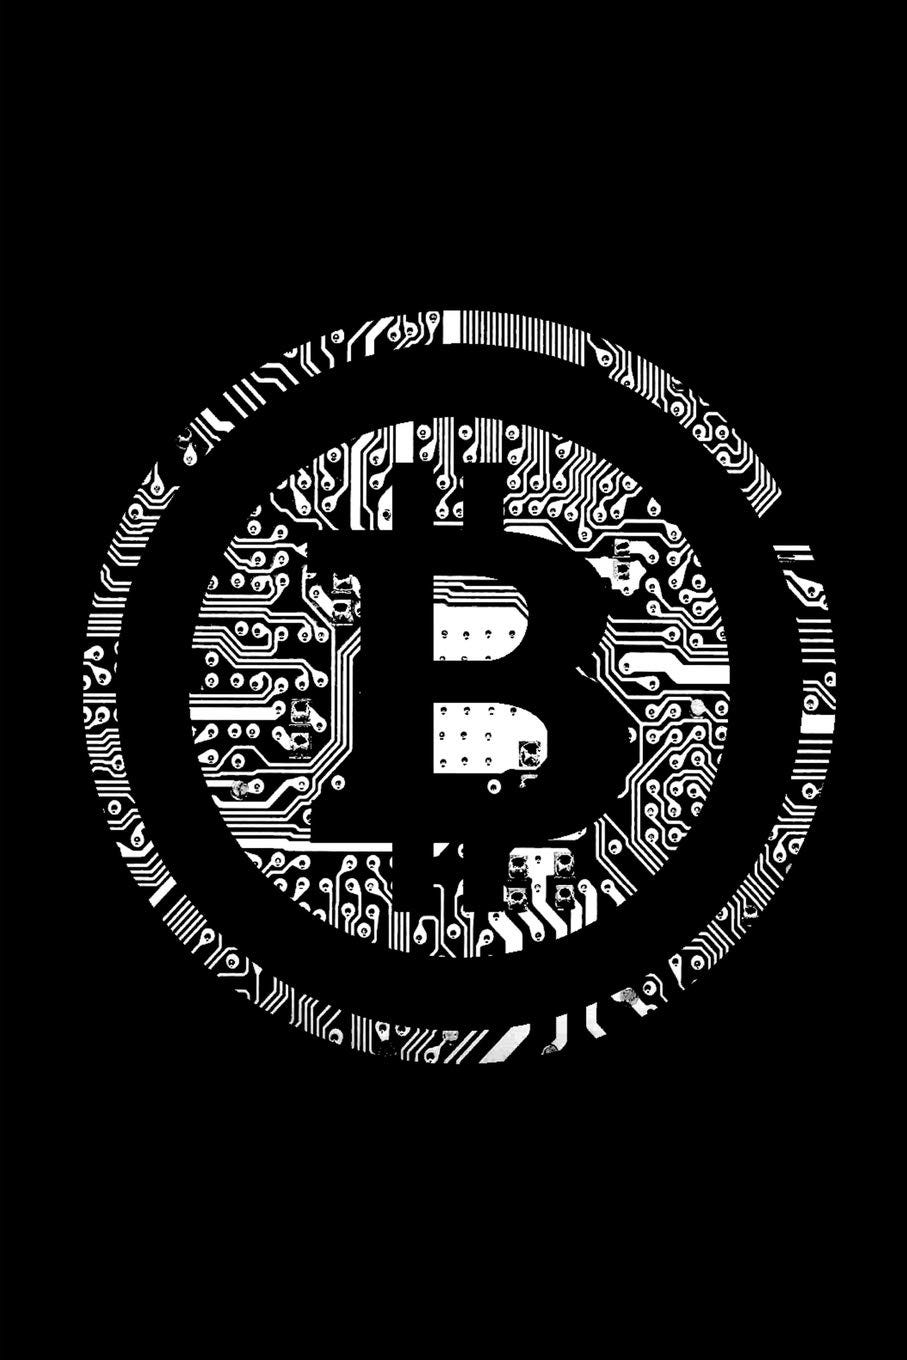 Amazon.com: Bitcoin Notebook: White BTC Crypto Logo Design ~ Small ...